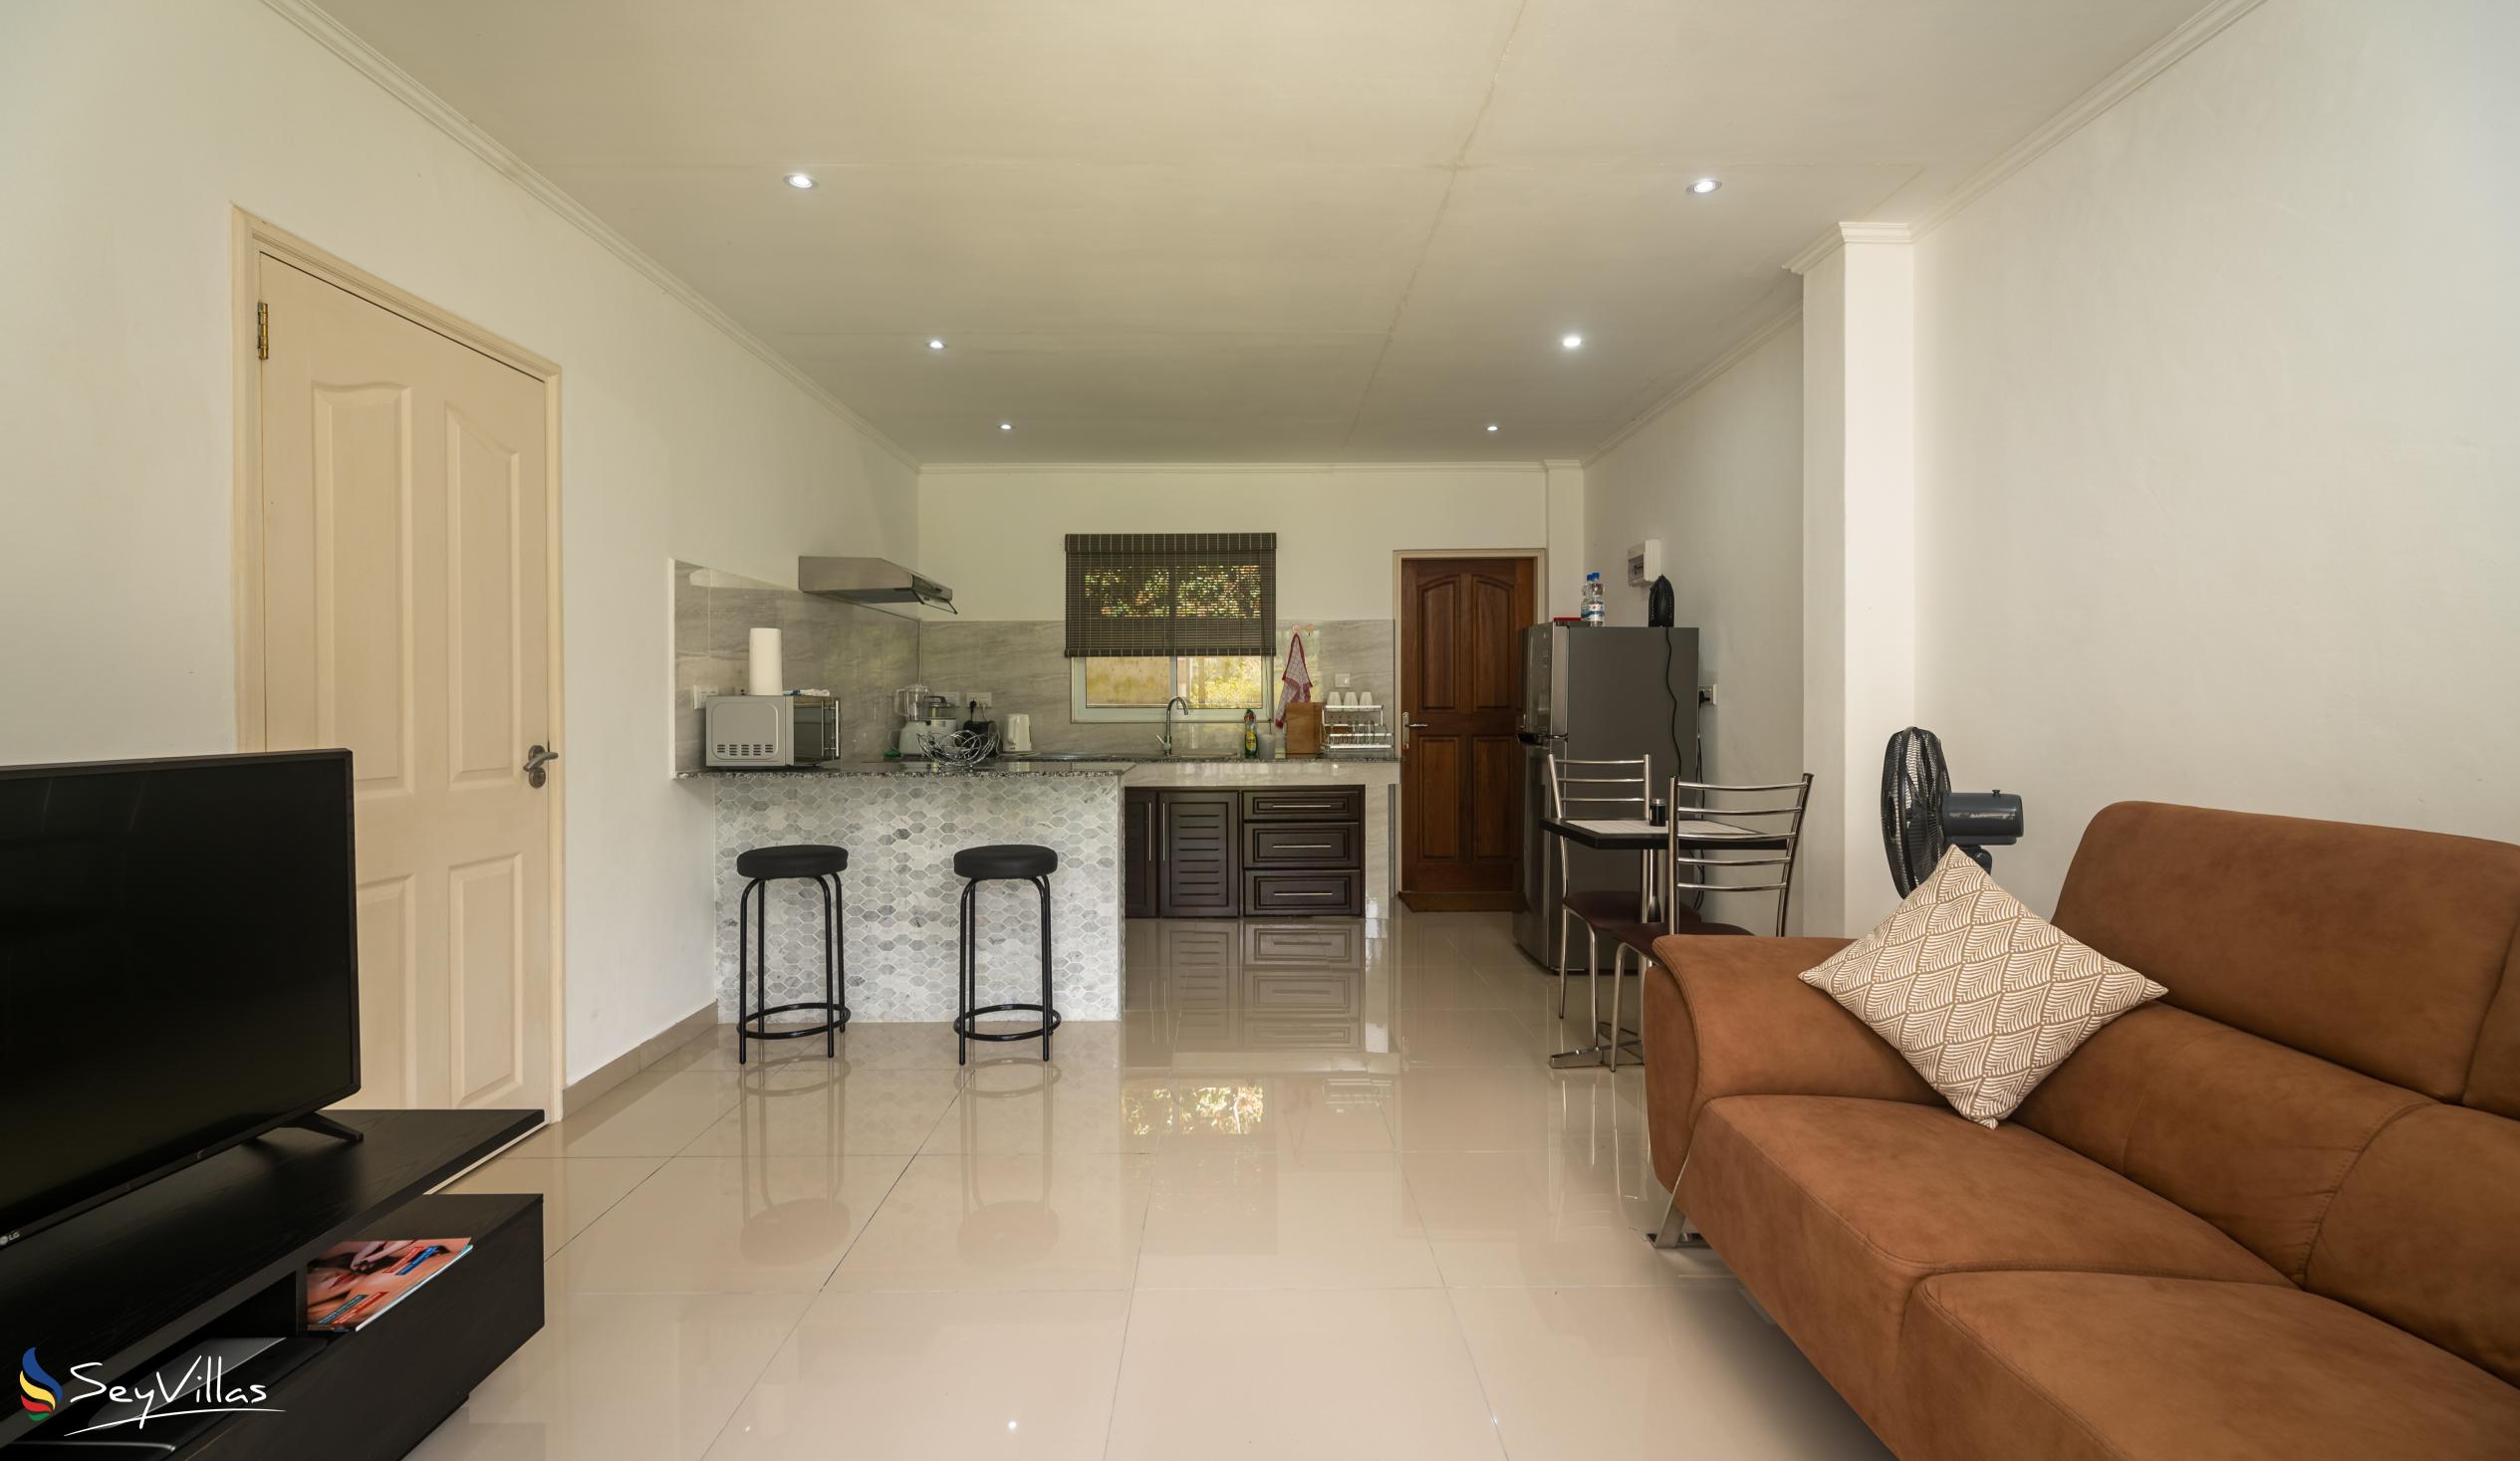 Foto 28: Paul's Residence - Appartamento con 1 camera - Mahé (Seychelles)